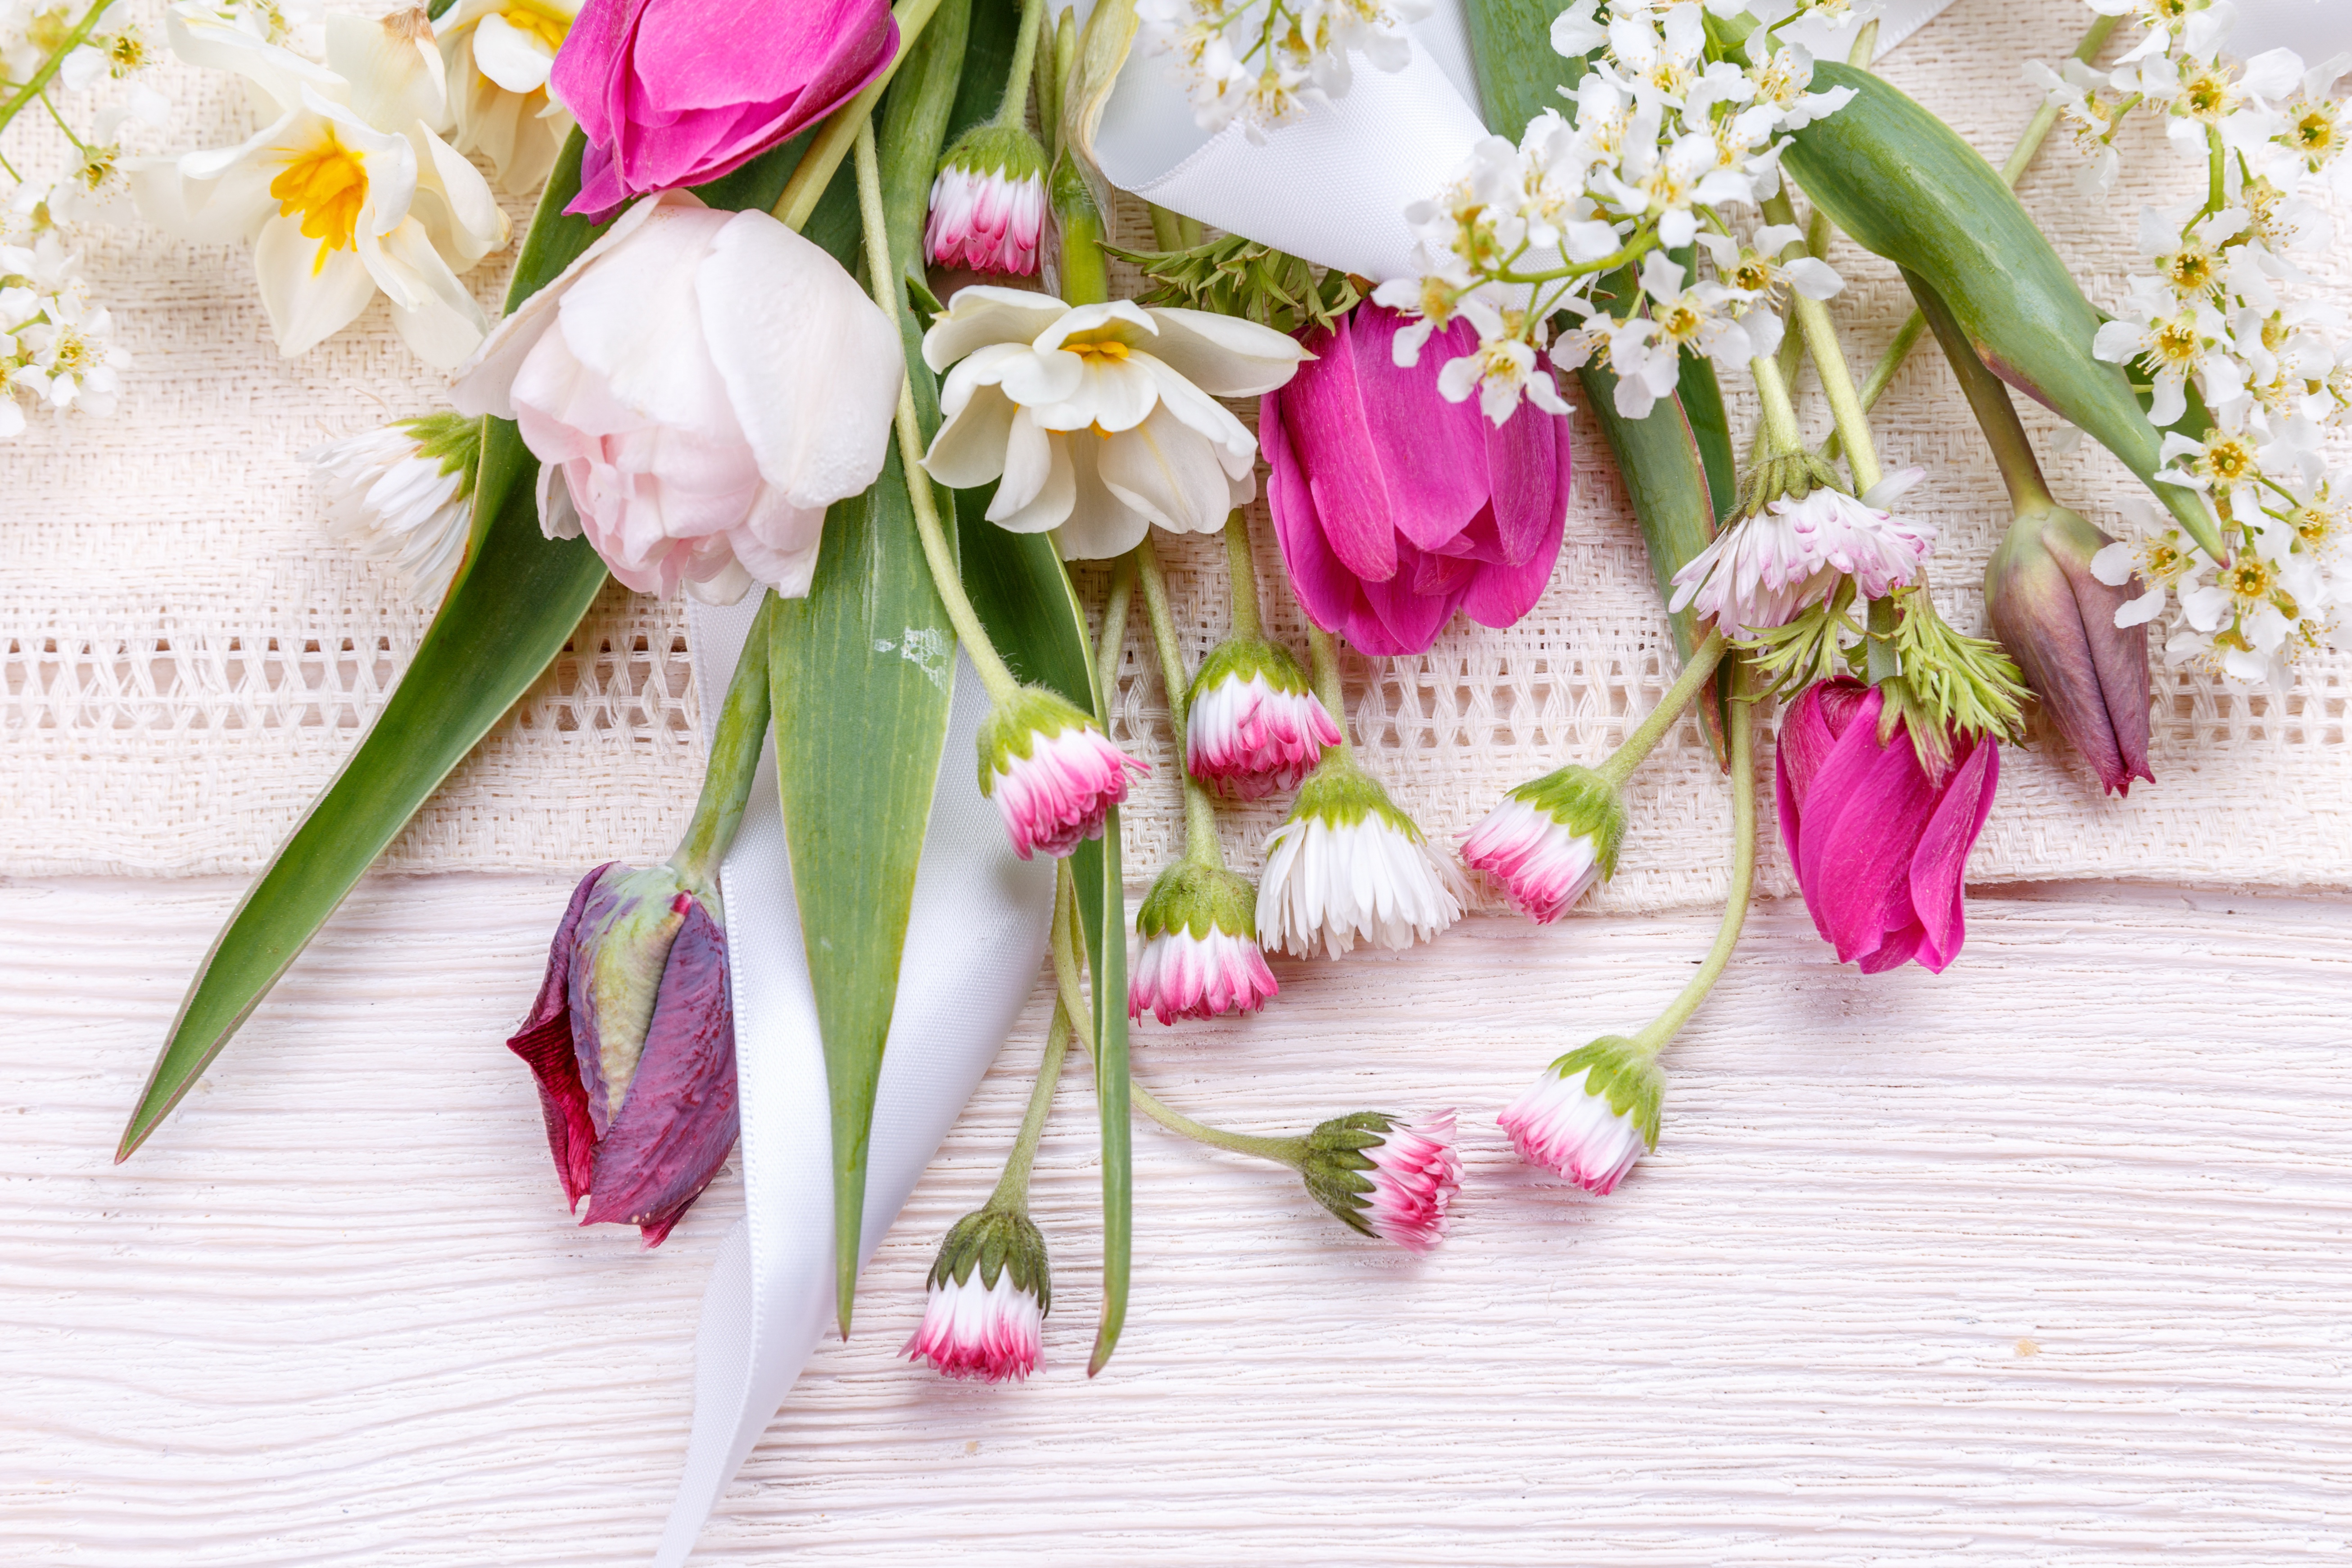 Фон тюльпаны нежный. Фловерс Flowers цветы тюльпаны. Весенний букет. Нежные весенние цветы. Стильные весенние букеты.